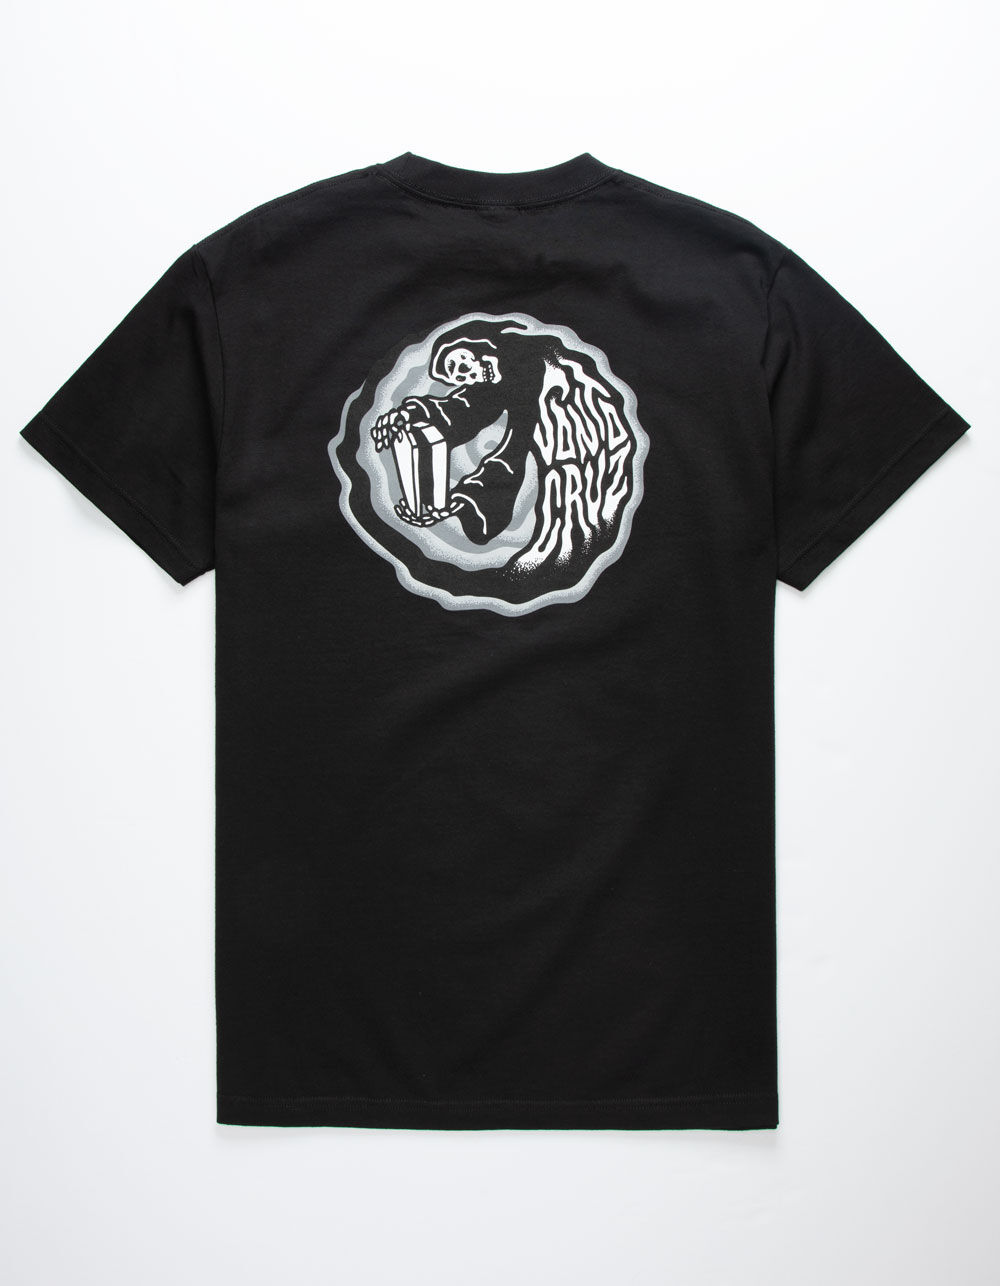 SANTA CRUZ Reaper Mens T-Shirt - BLACK | Tillys